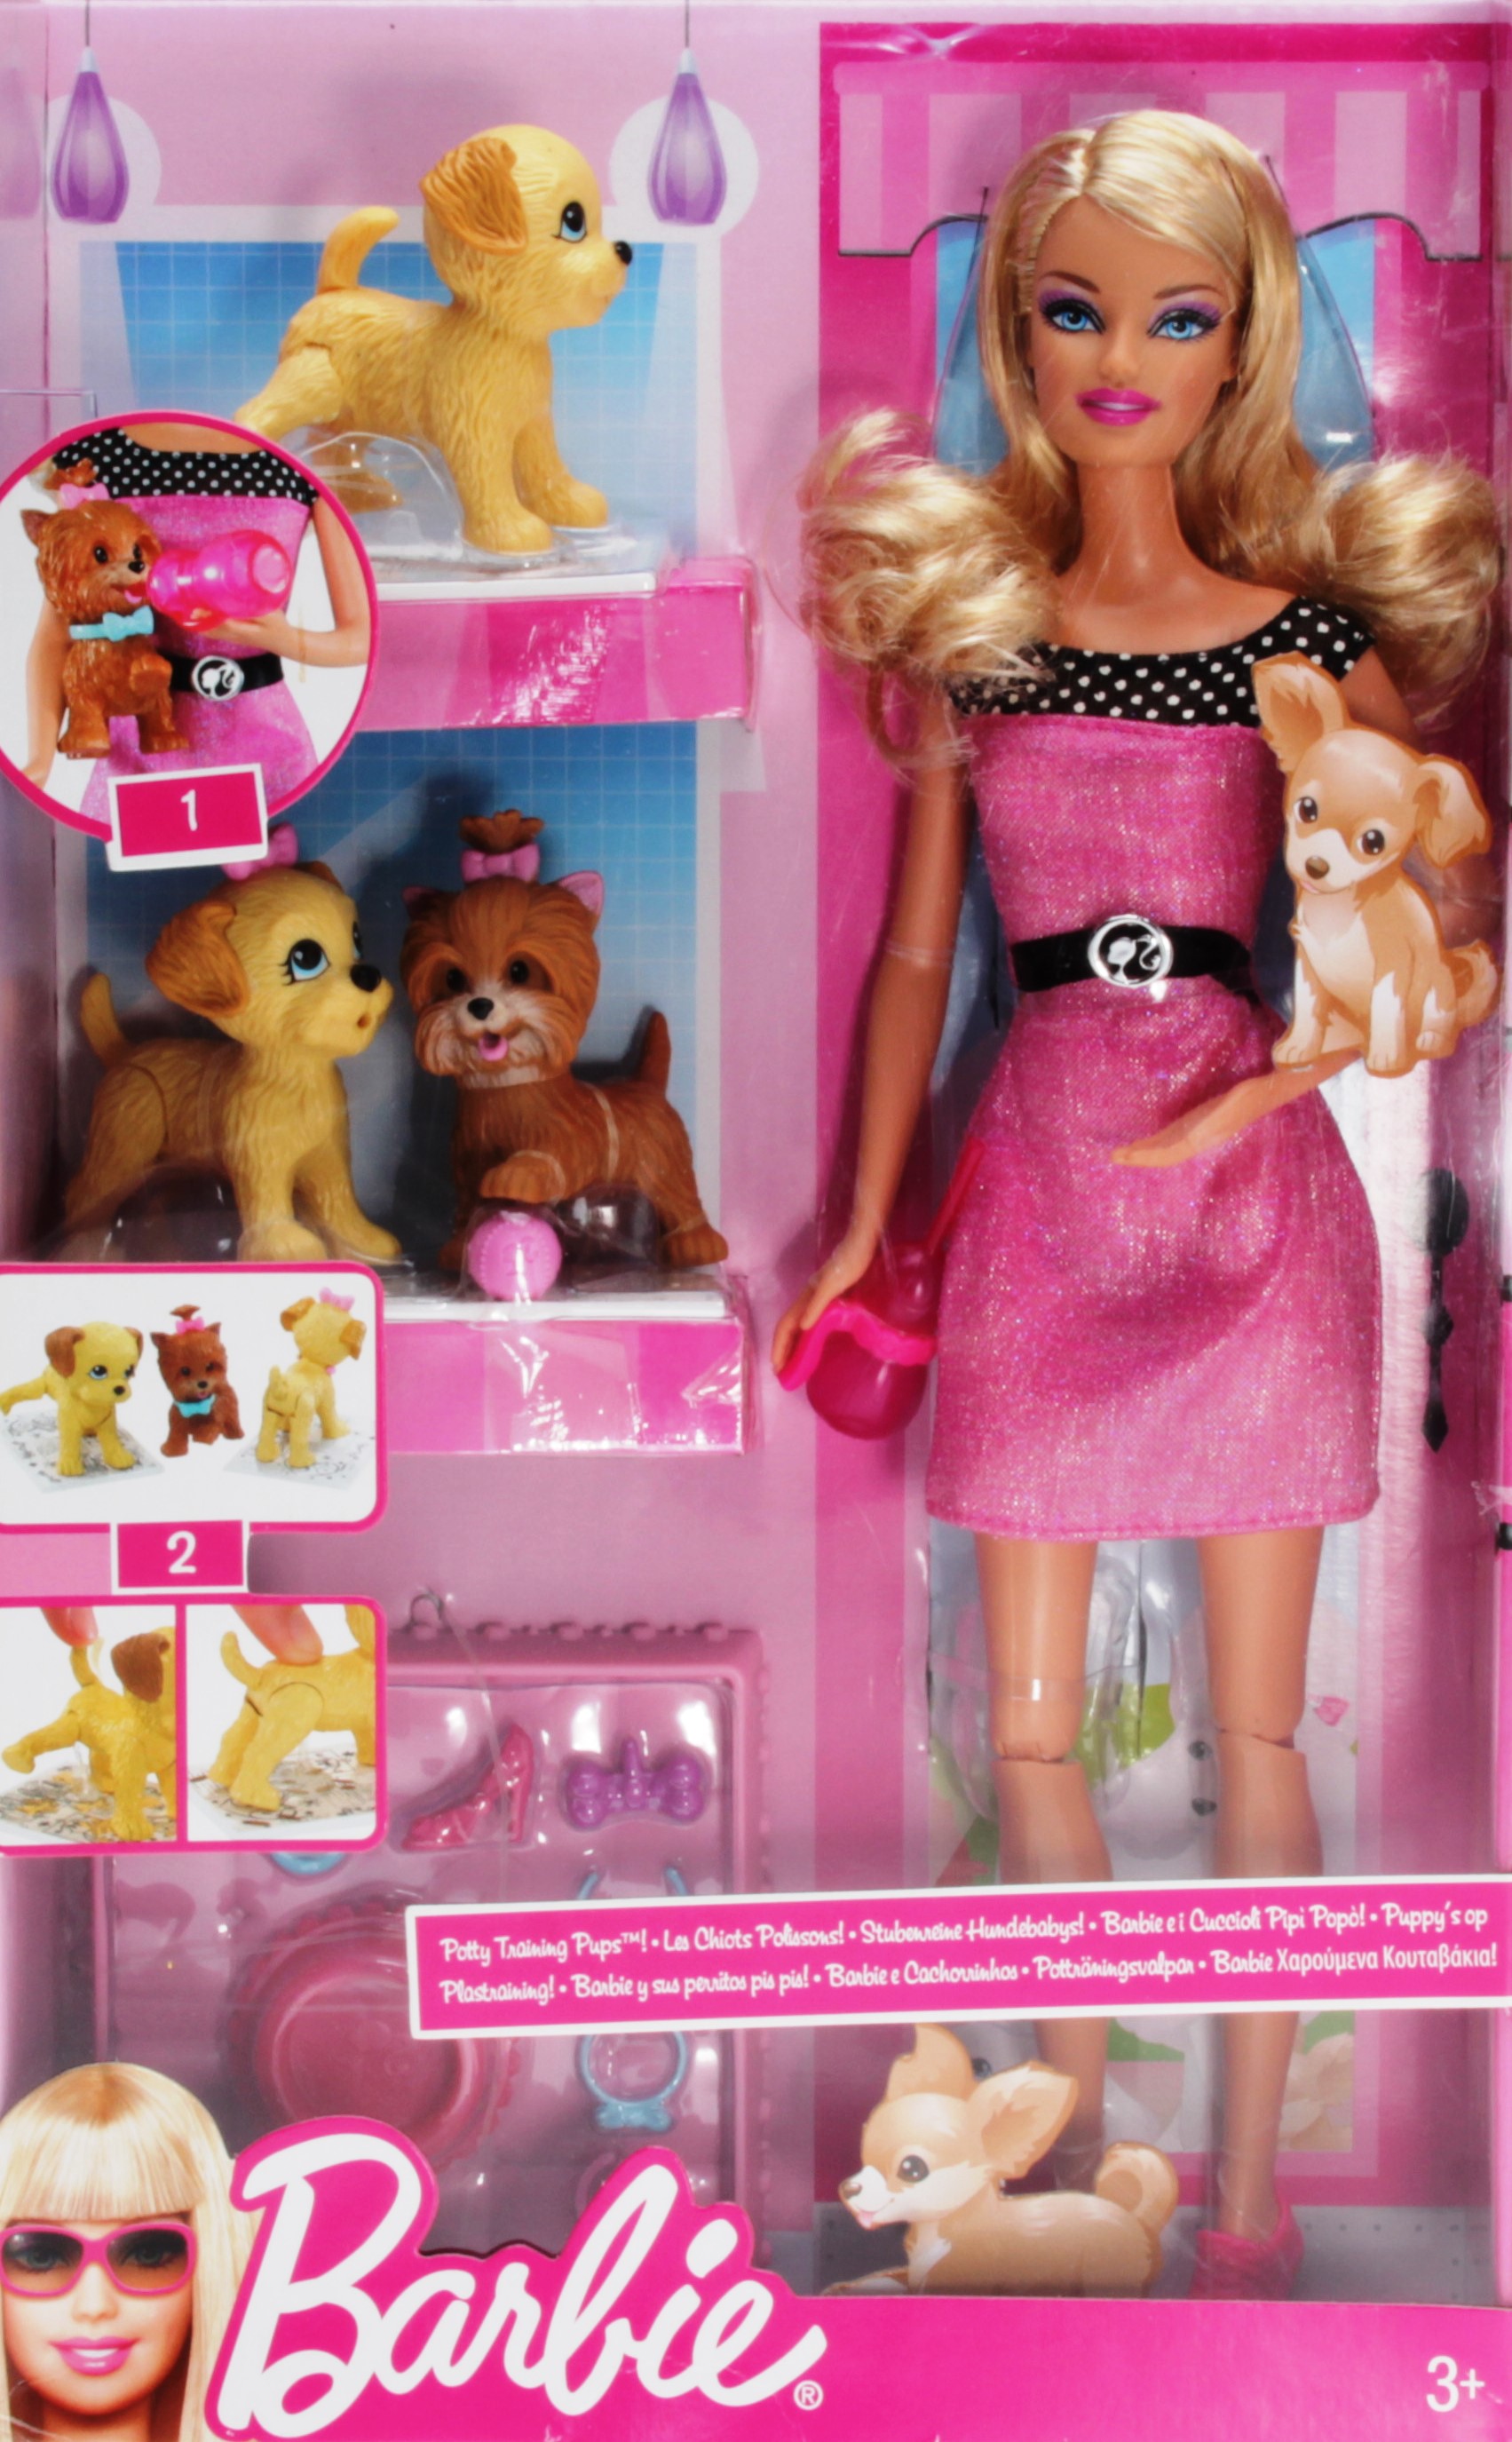 david gundling recommends barbie com potty race pic